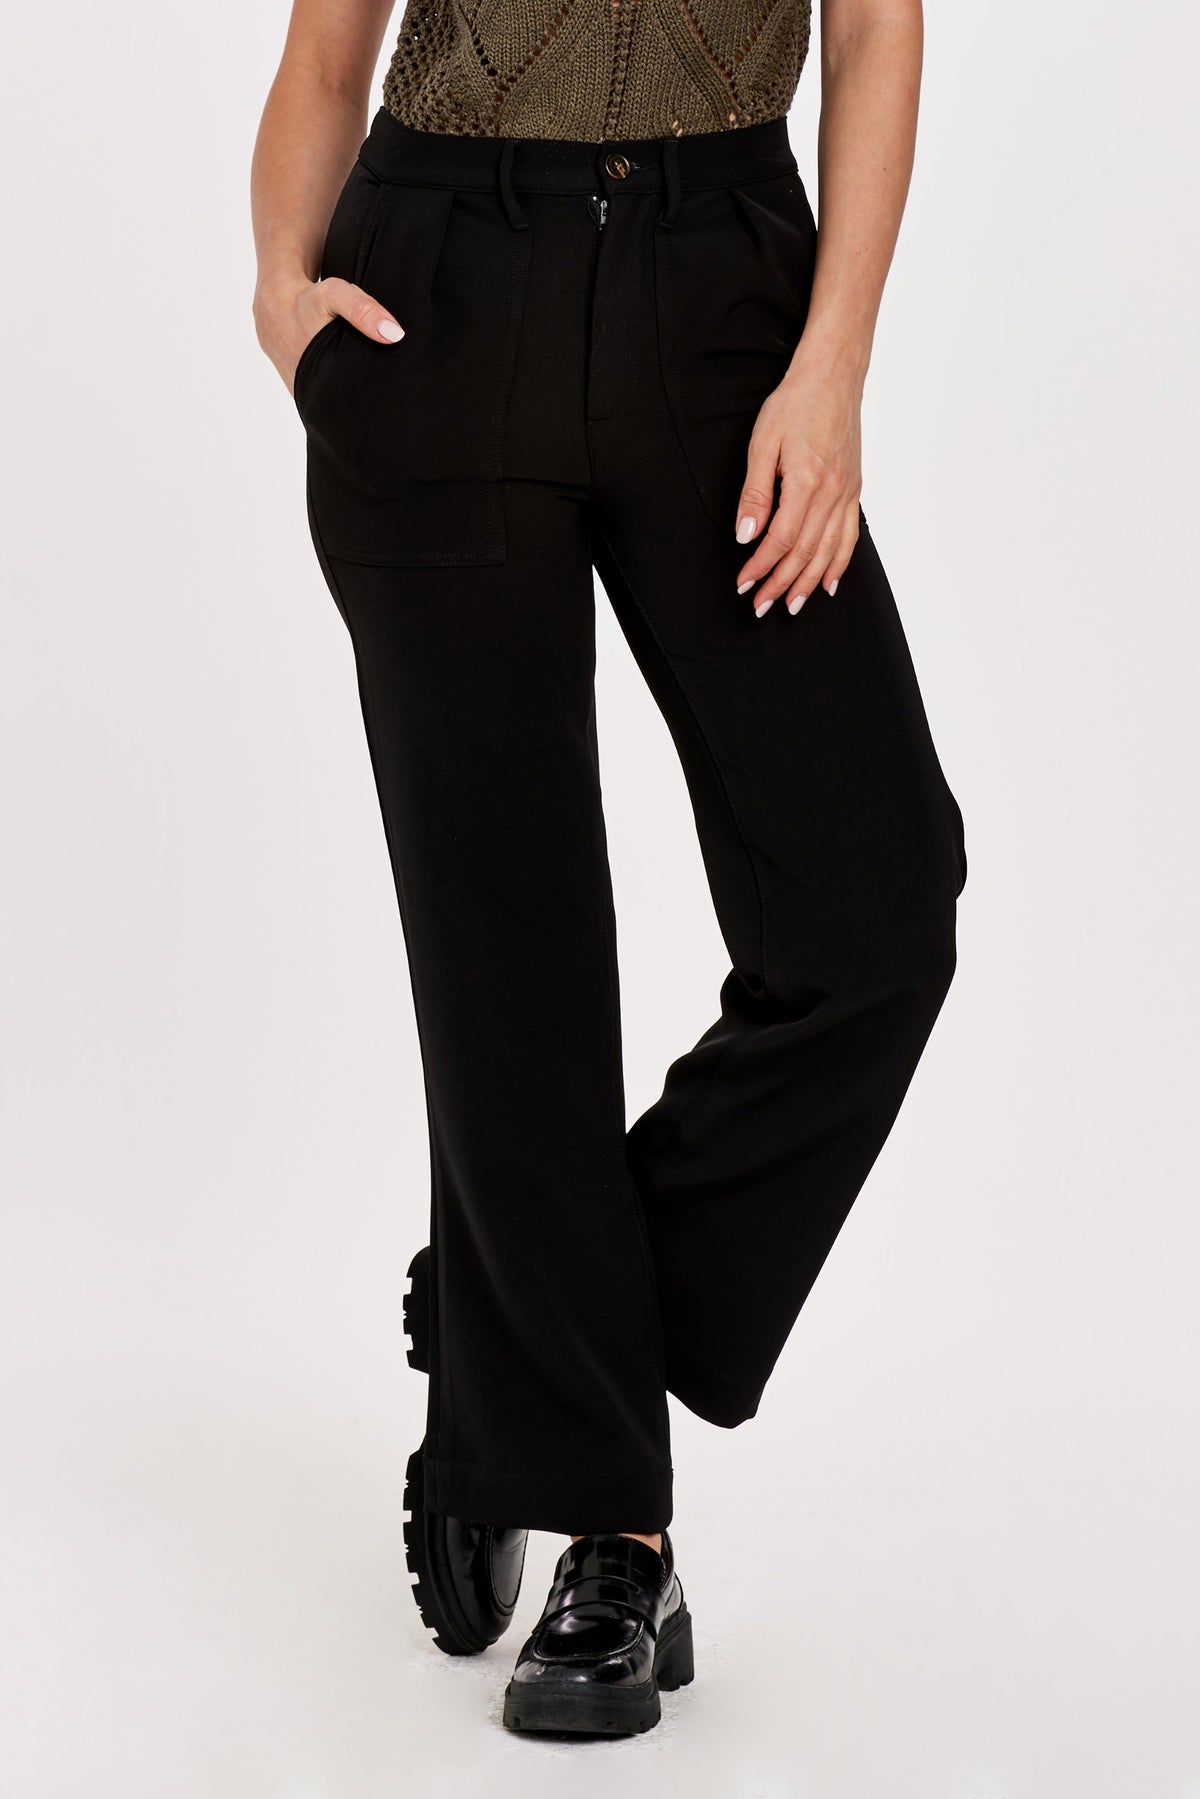 cordova-high-rise-straight-leg-cropped-pant-black